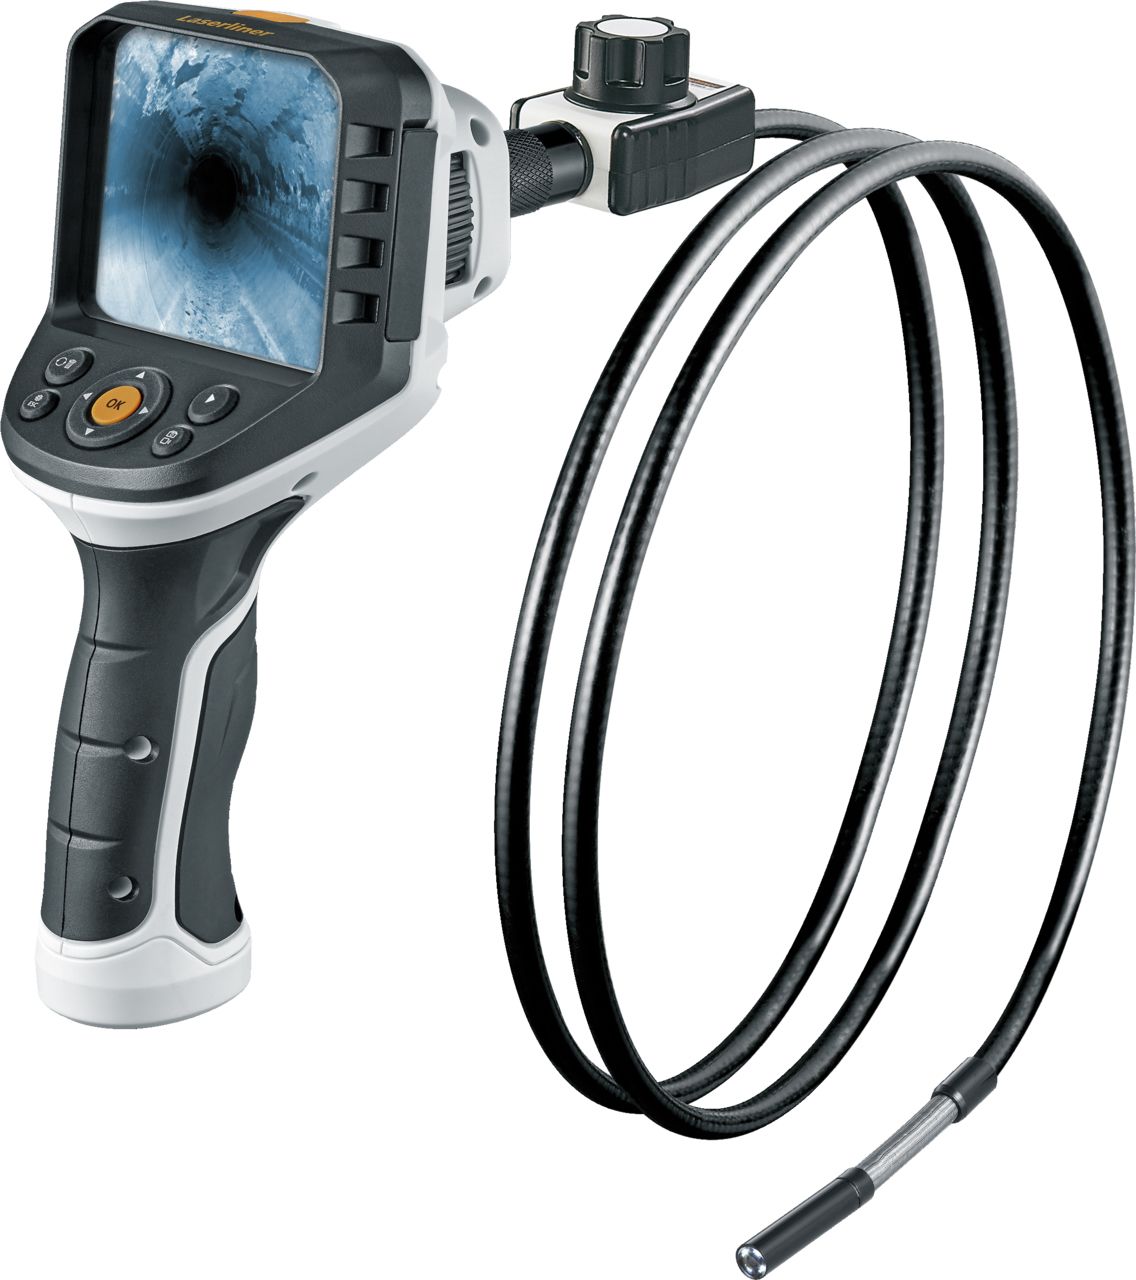 Laserliner 9mm probe Inspection Camera Kit, 1000mm Probe Length, 640 x 480pixels Resolution, LED Illumination